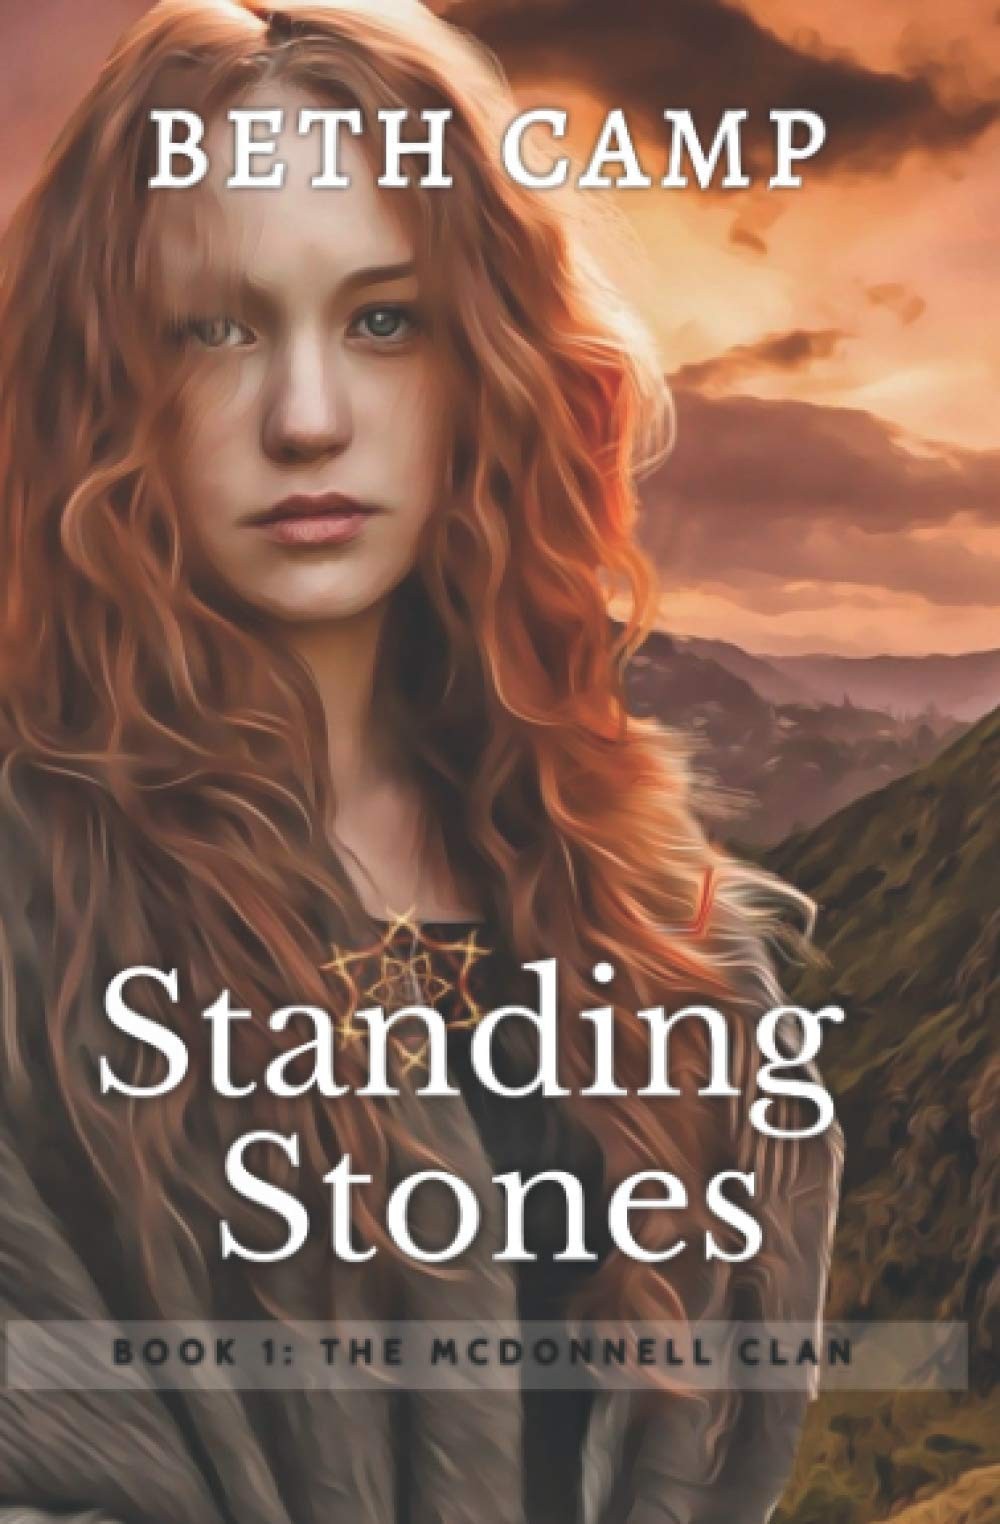 Standing Stones